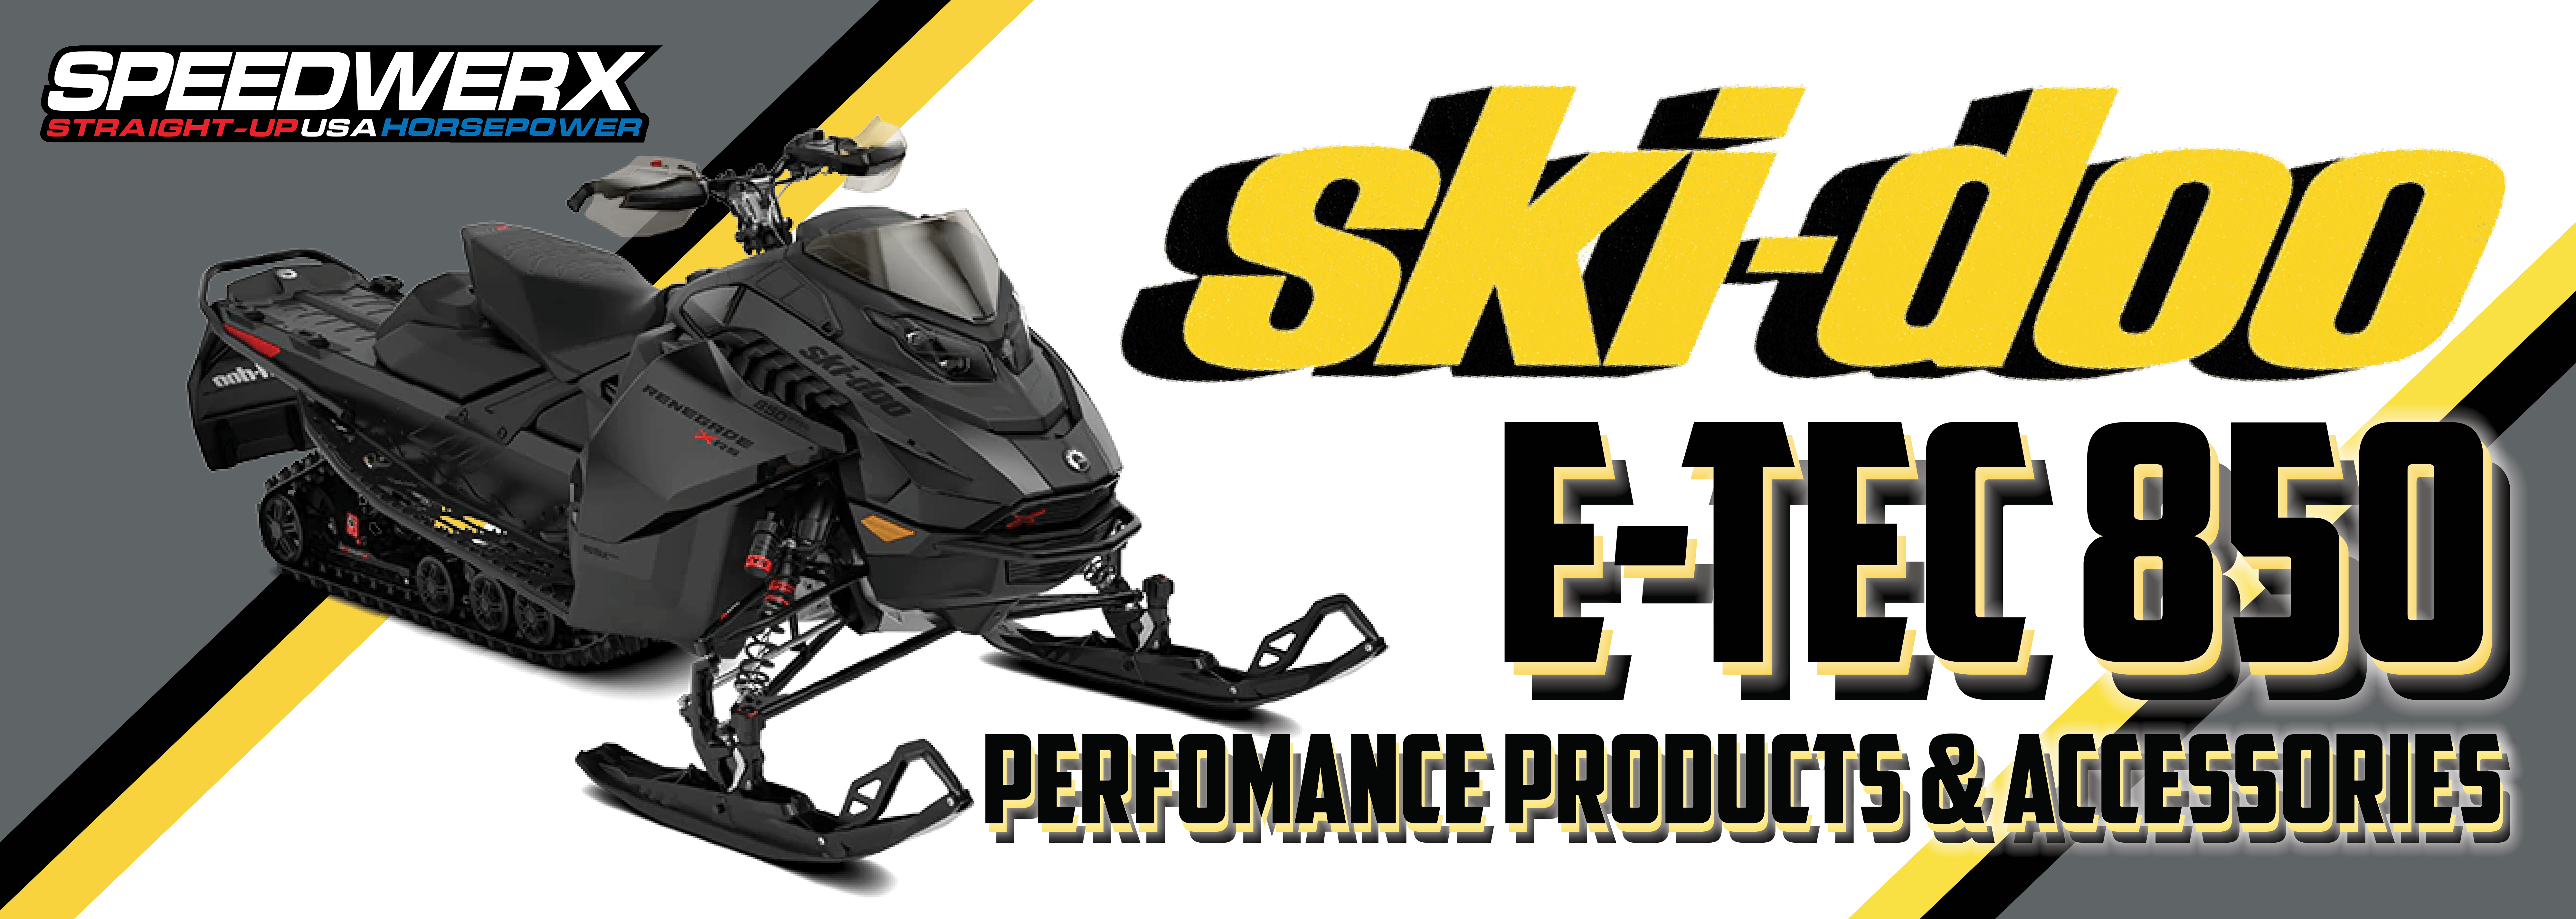 2017-2024 Ski-Doo REV Gen4/5 850 Performance Products & Parts | Speedwerx, Inc.